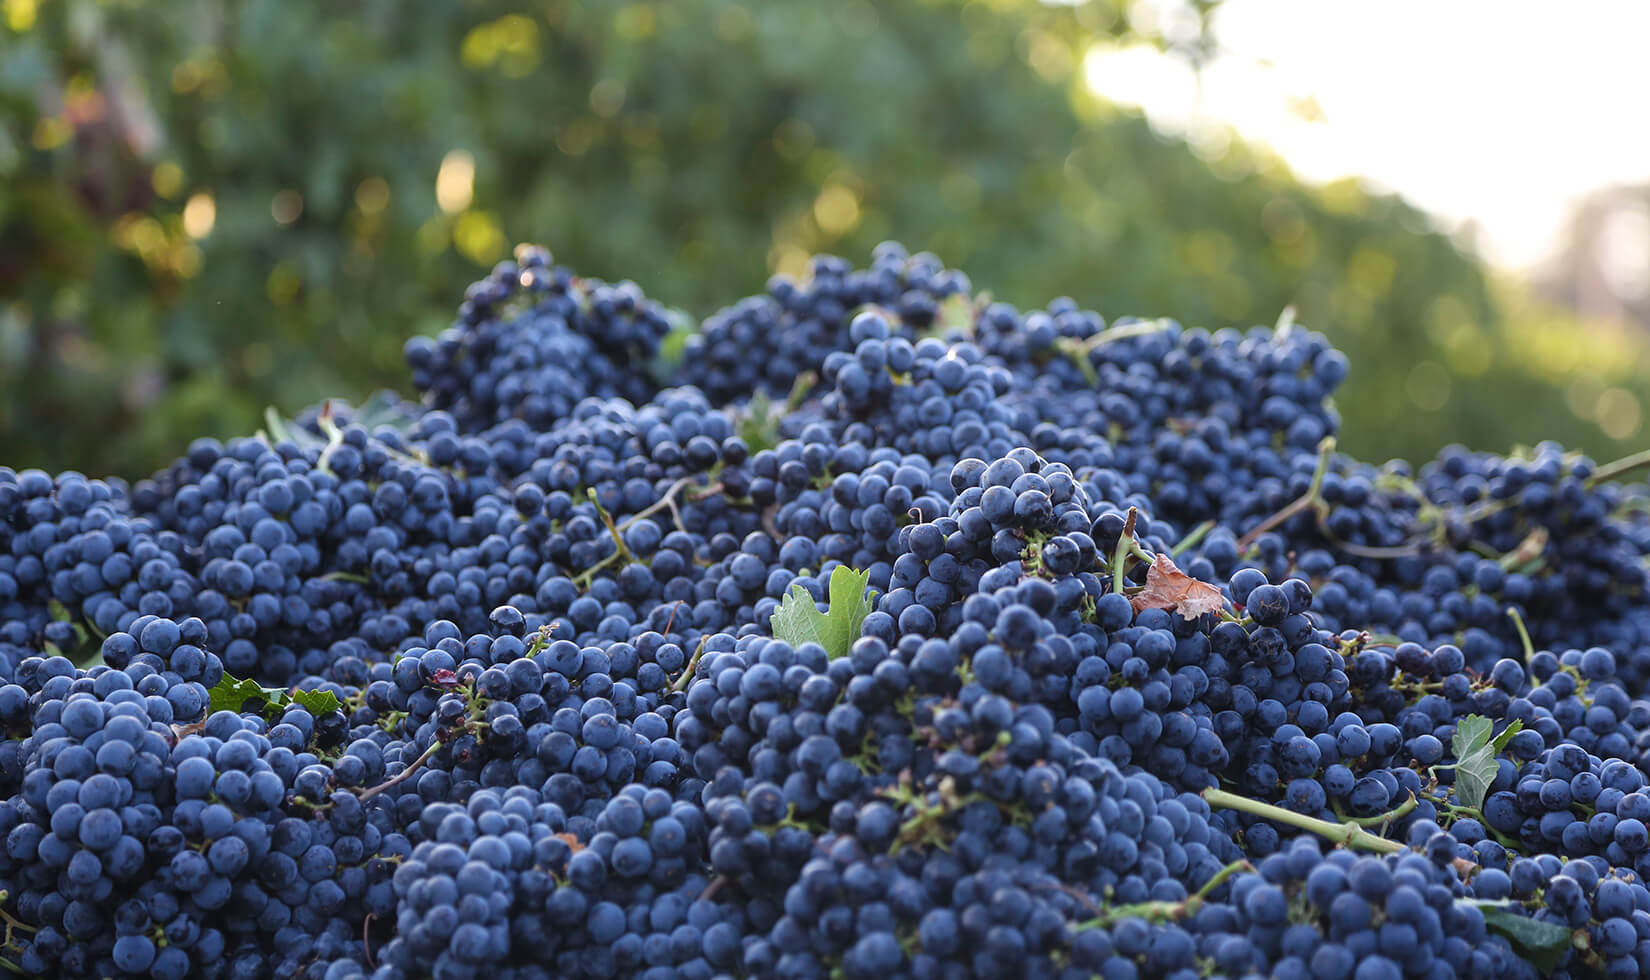 Merlot grape clusters from the 2014 Jordan Winery harvest